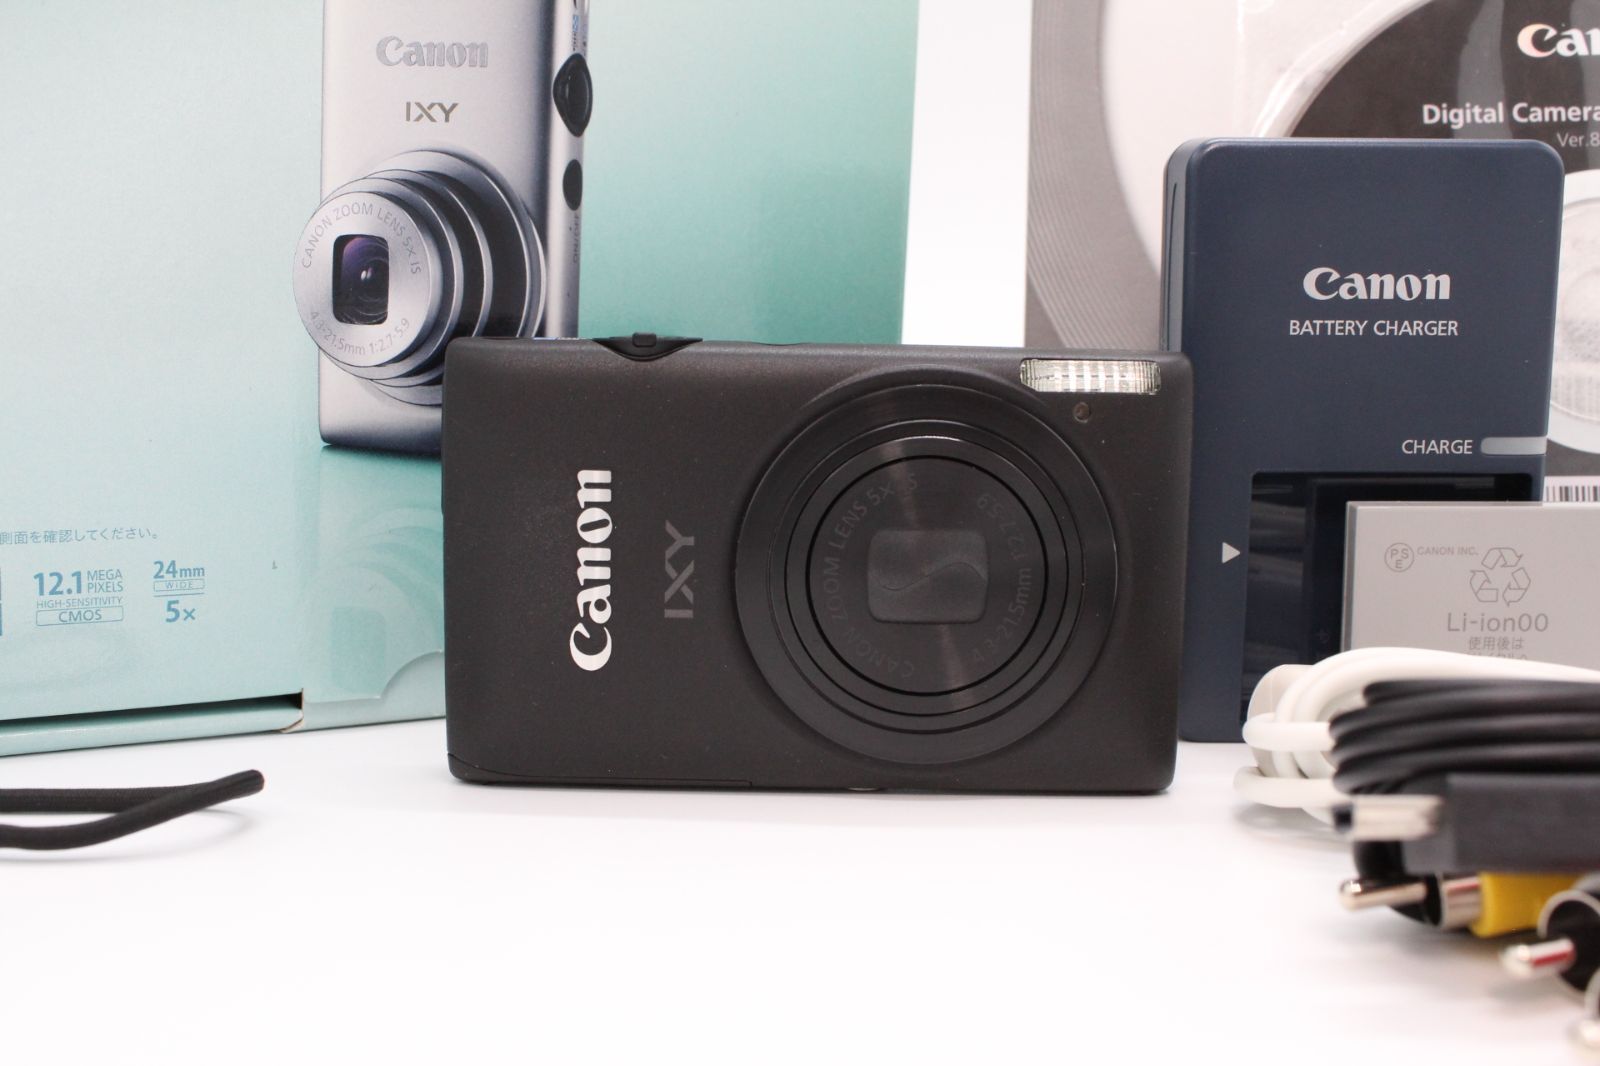 Canon IXY 410F SL キャノン デジタルカメラ410F - デジタルカメラ